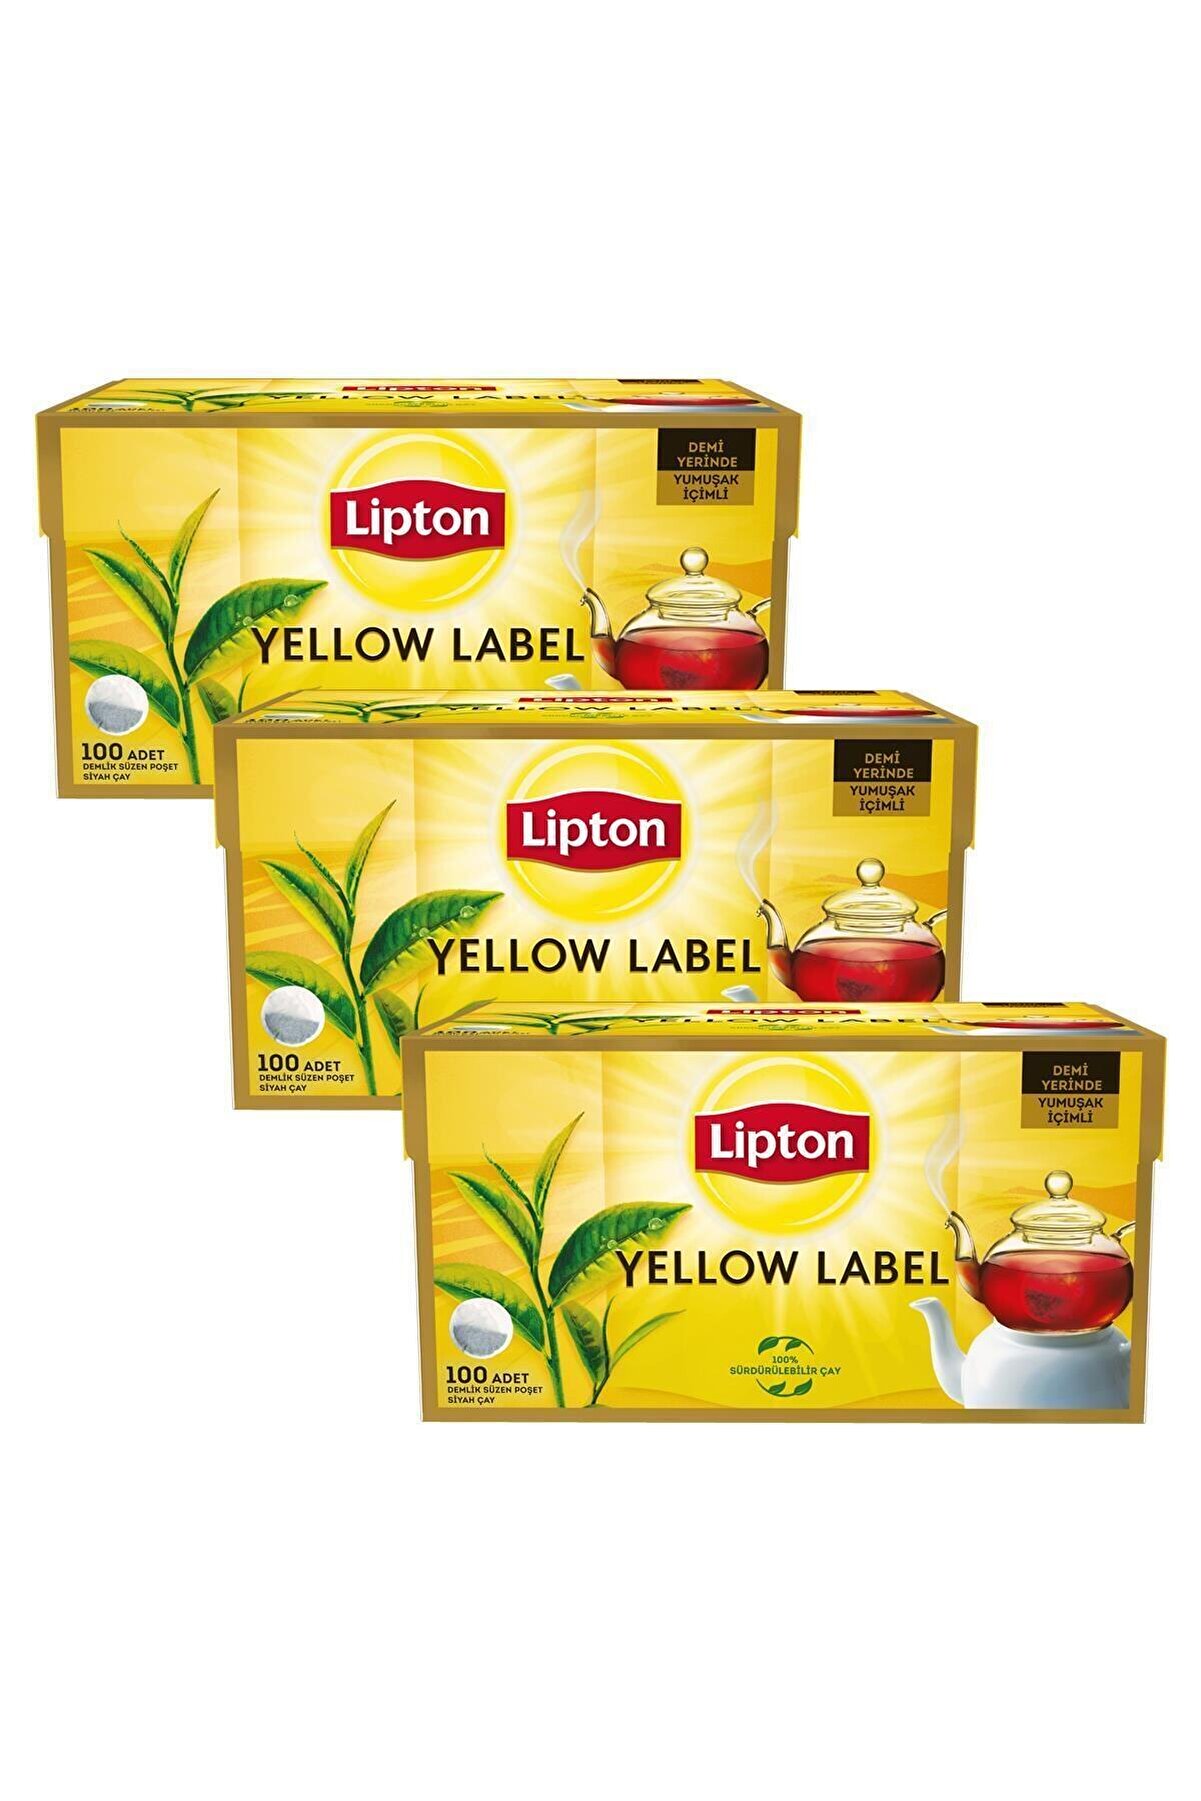 Lipton Yellow Label Demlik Poşet Çay 100'lü X 3 Adet